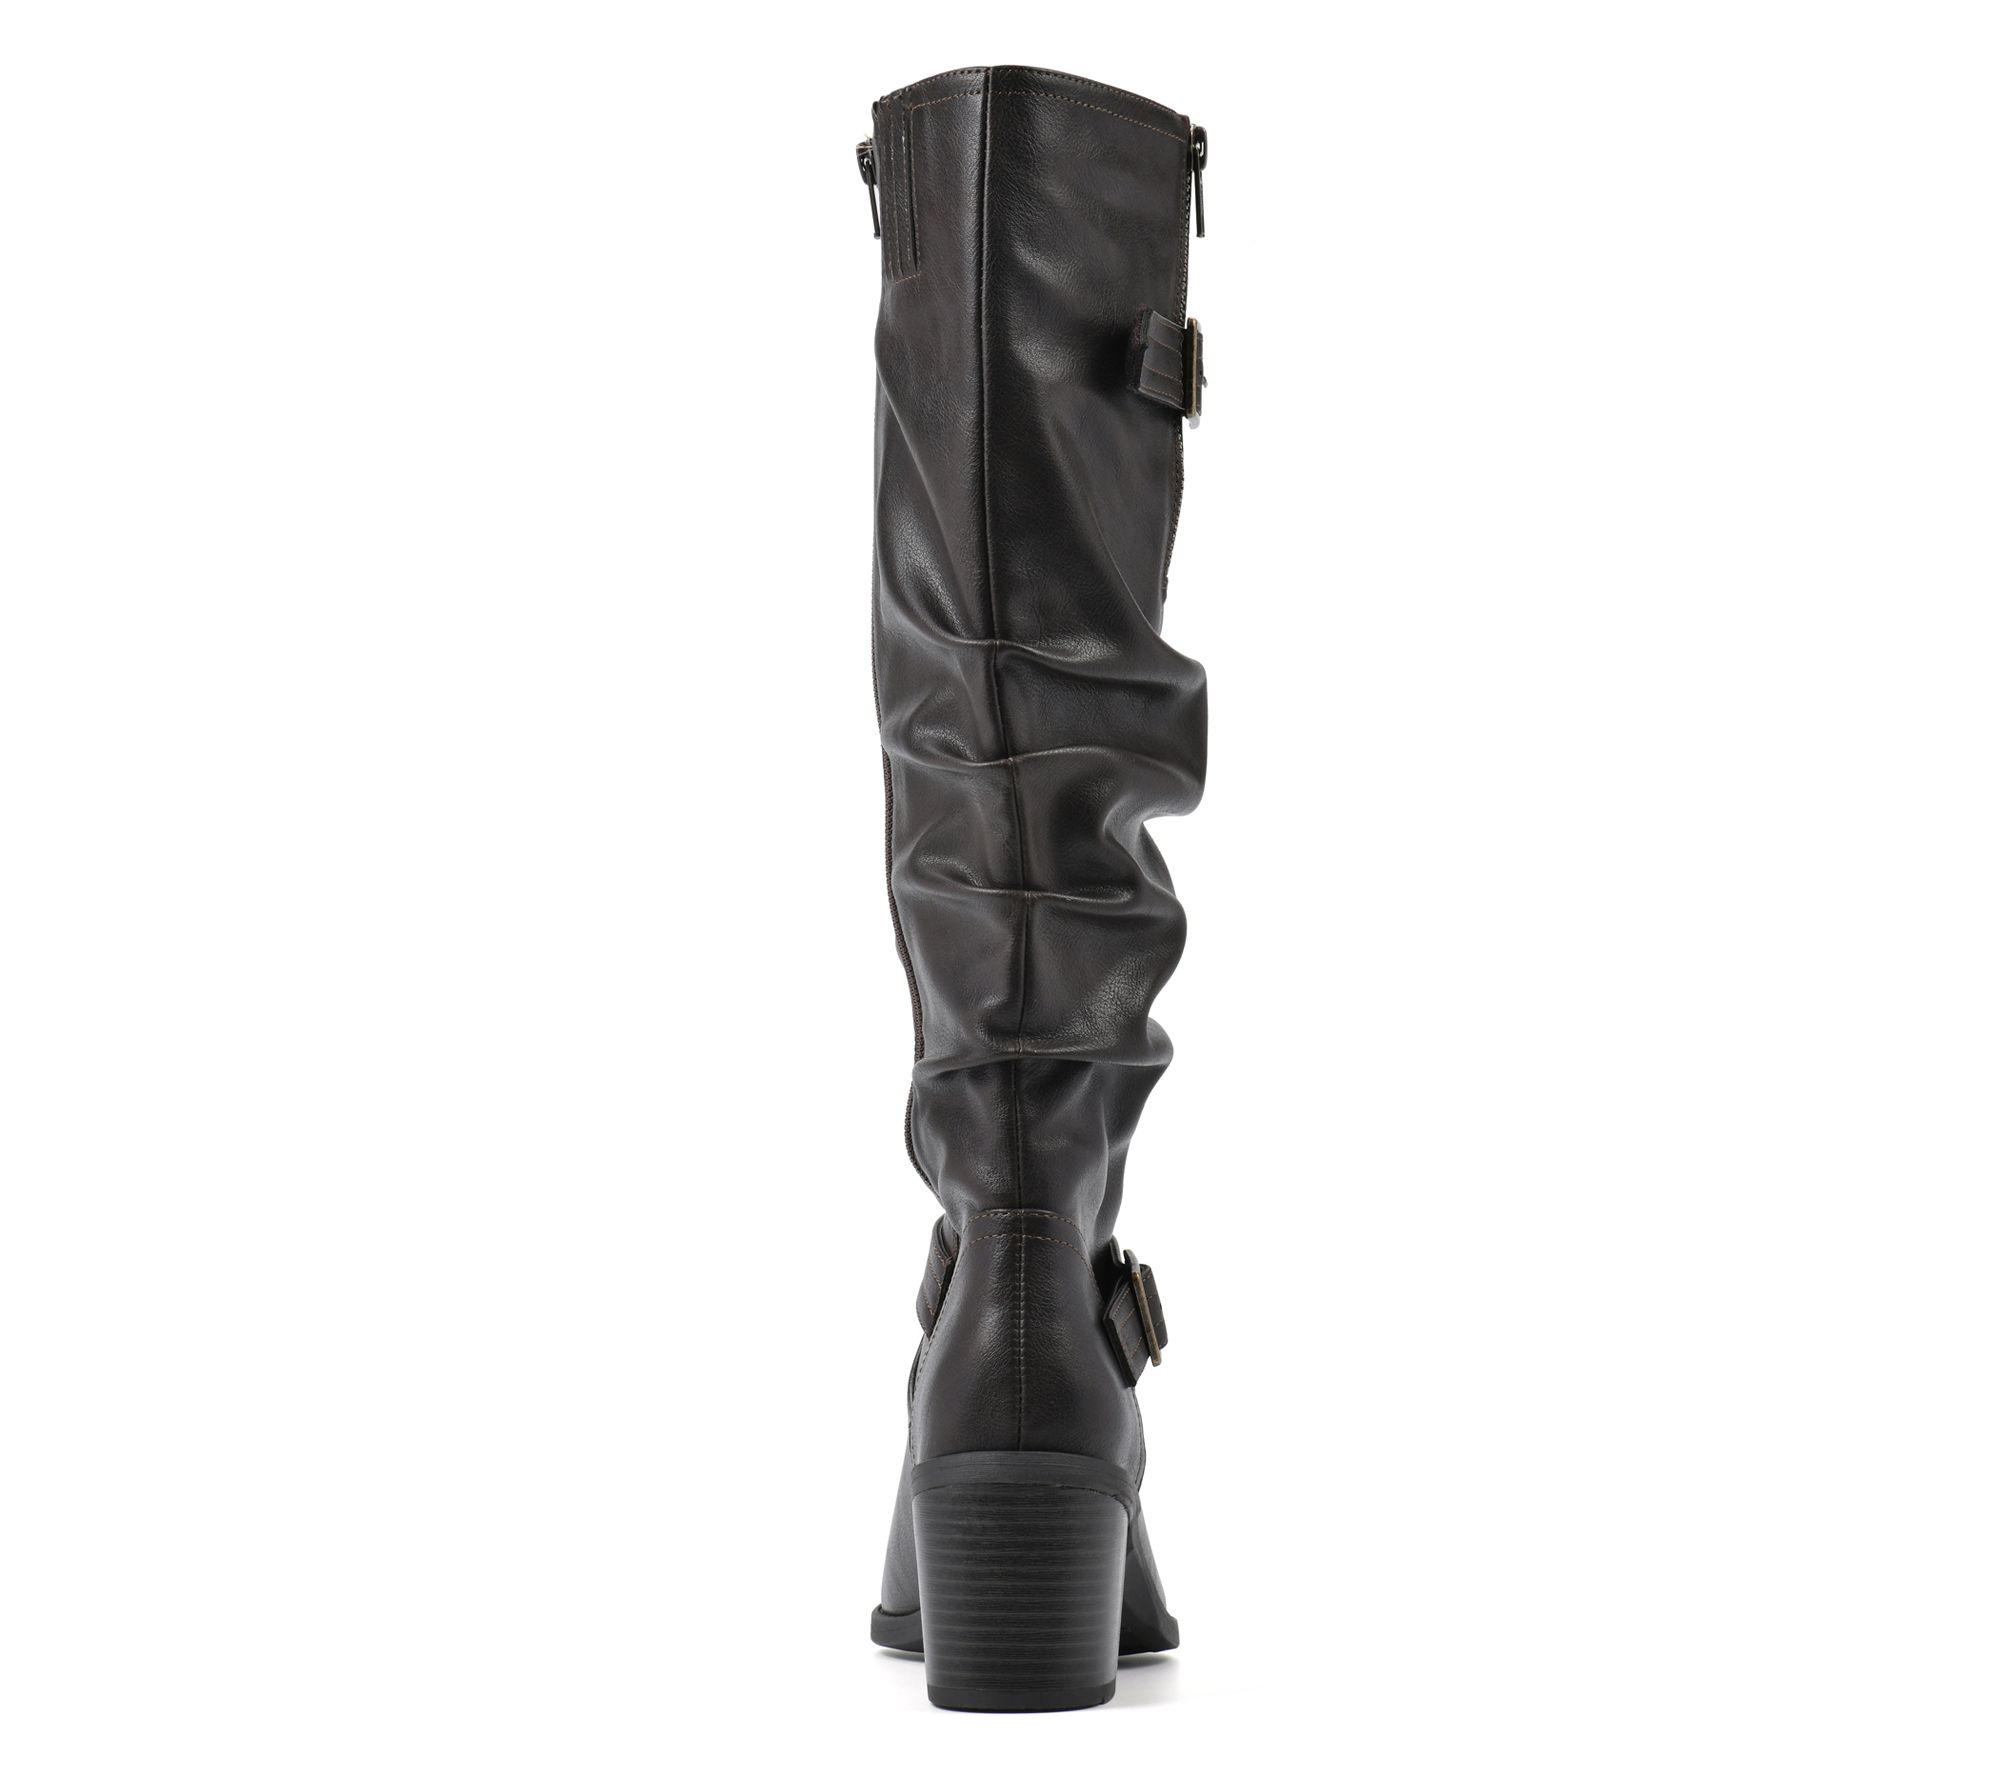 White Mountain Knee-High Boot - Desirable - QVC.com